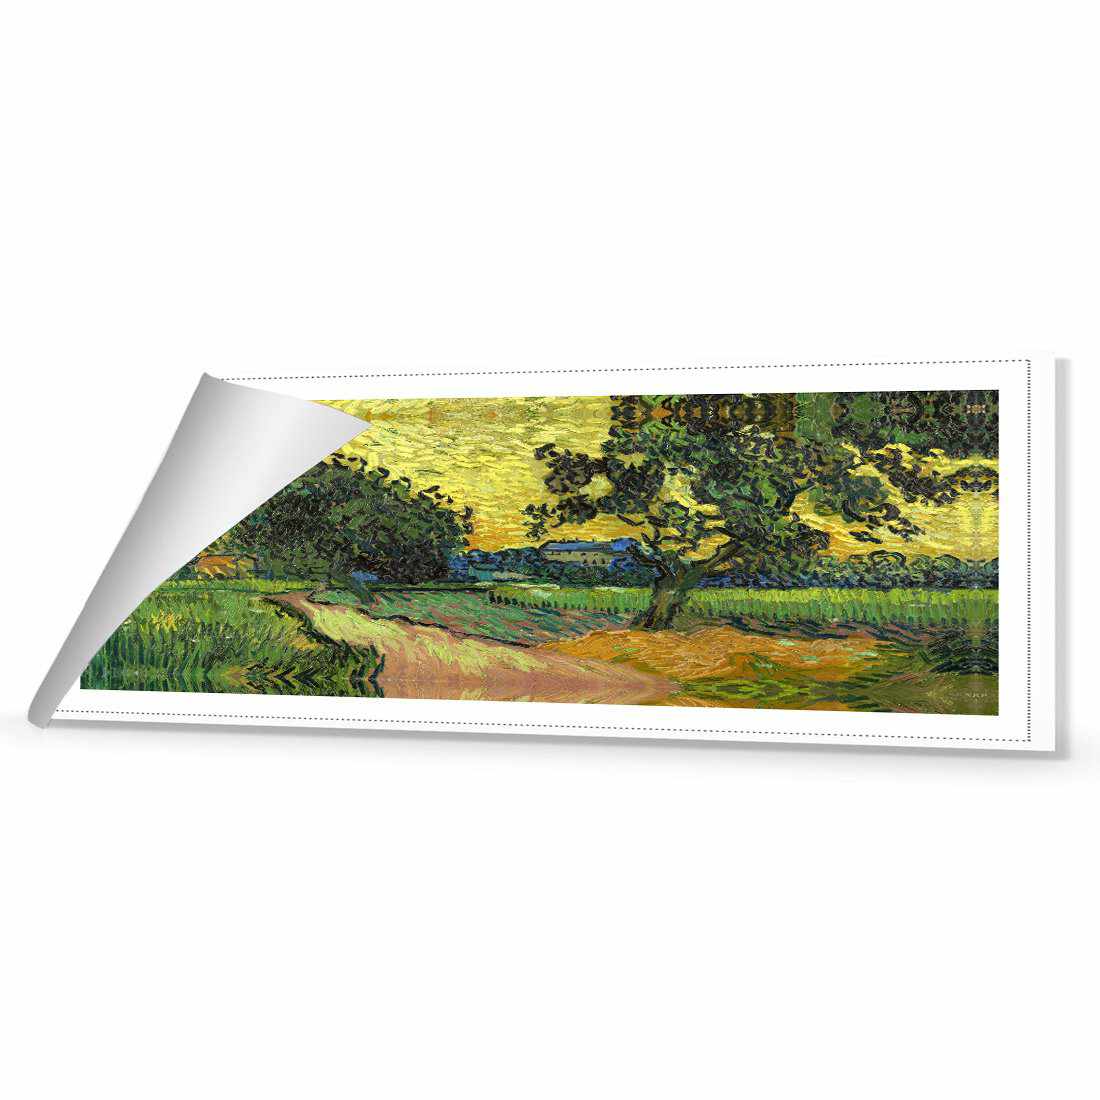 Landscape At Twilight - Van Gogh Canvas Art-Canvas-Wall Art Designs-60x20cm-Rolled Canvas-Wall Art Designs